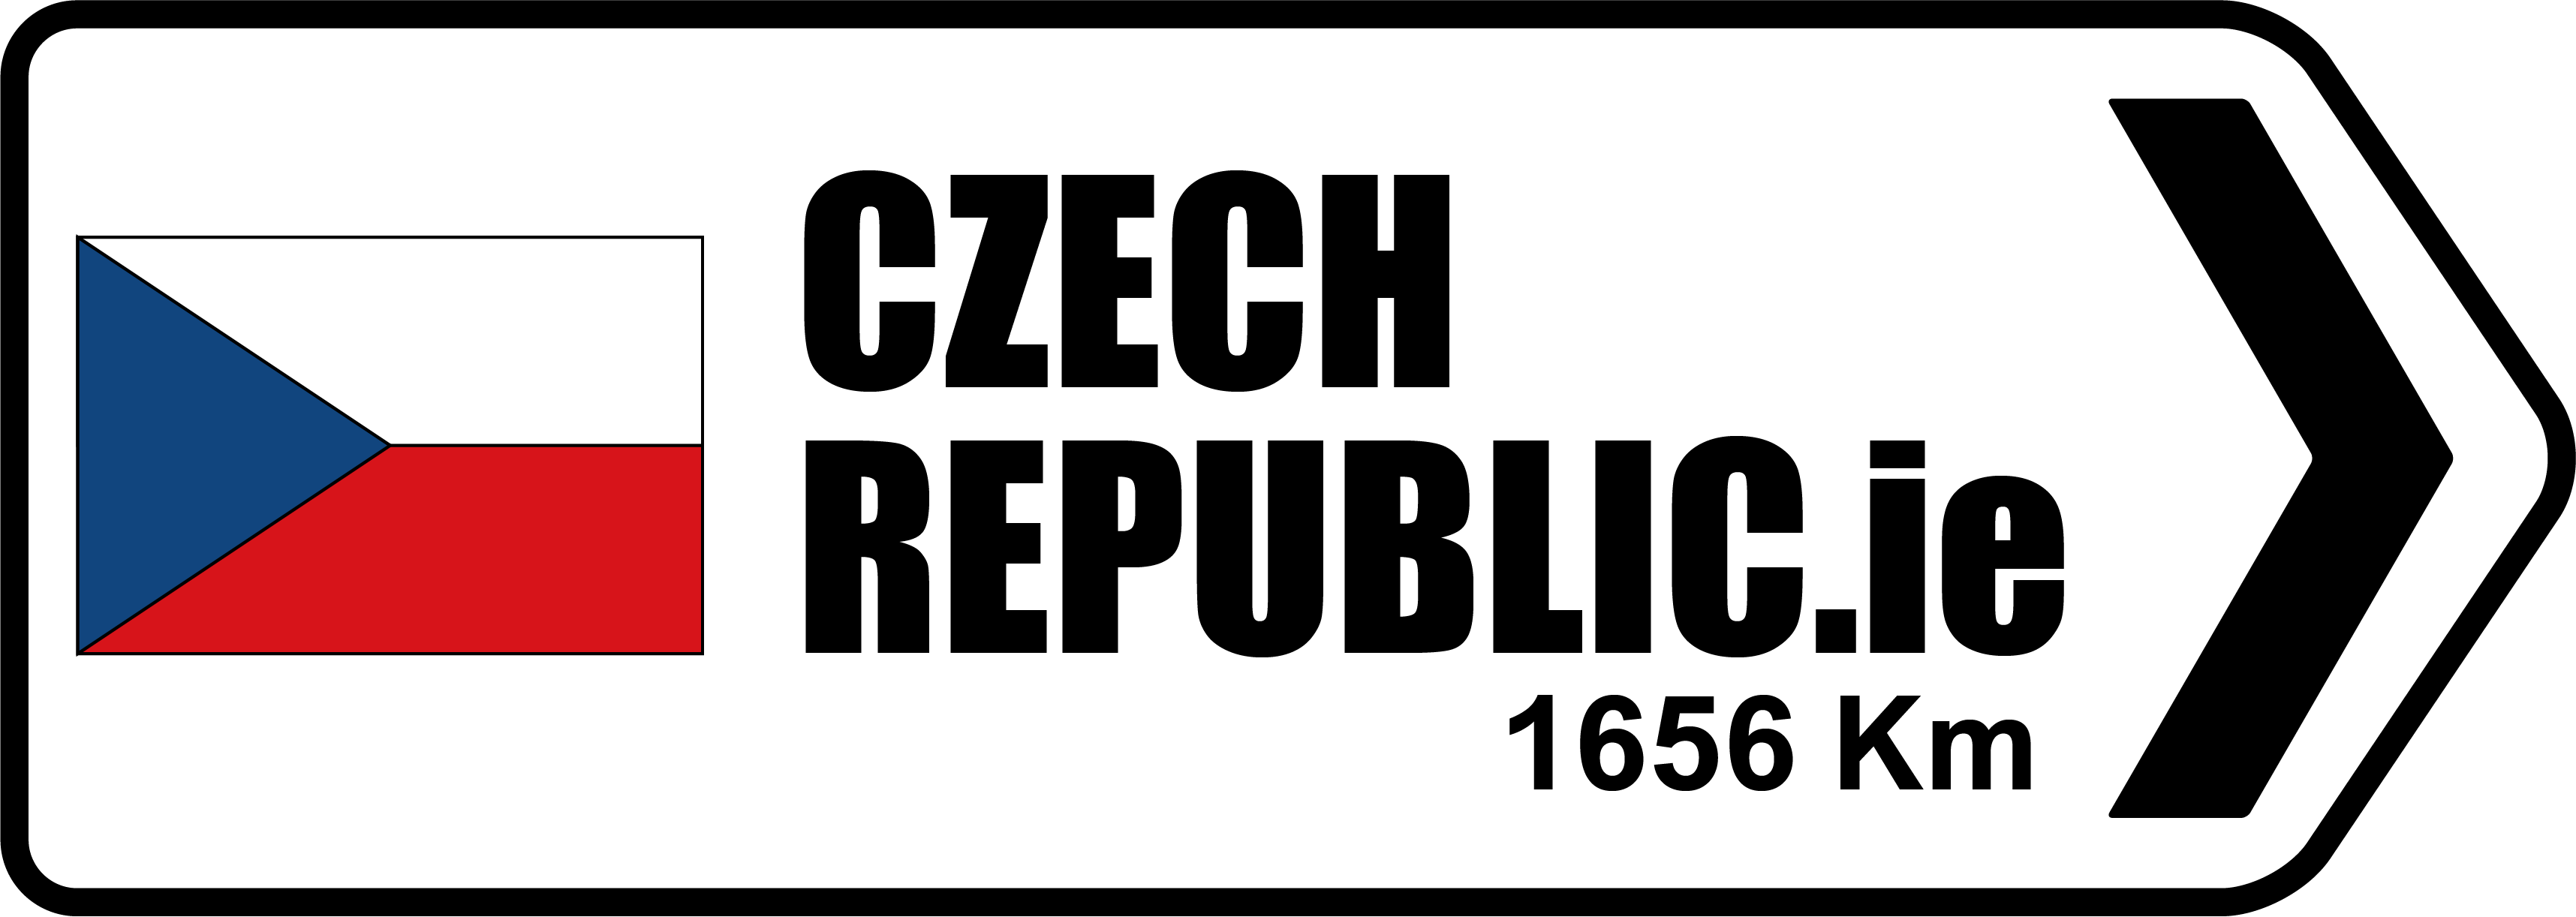 Visit Czech Republic from Ireland